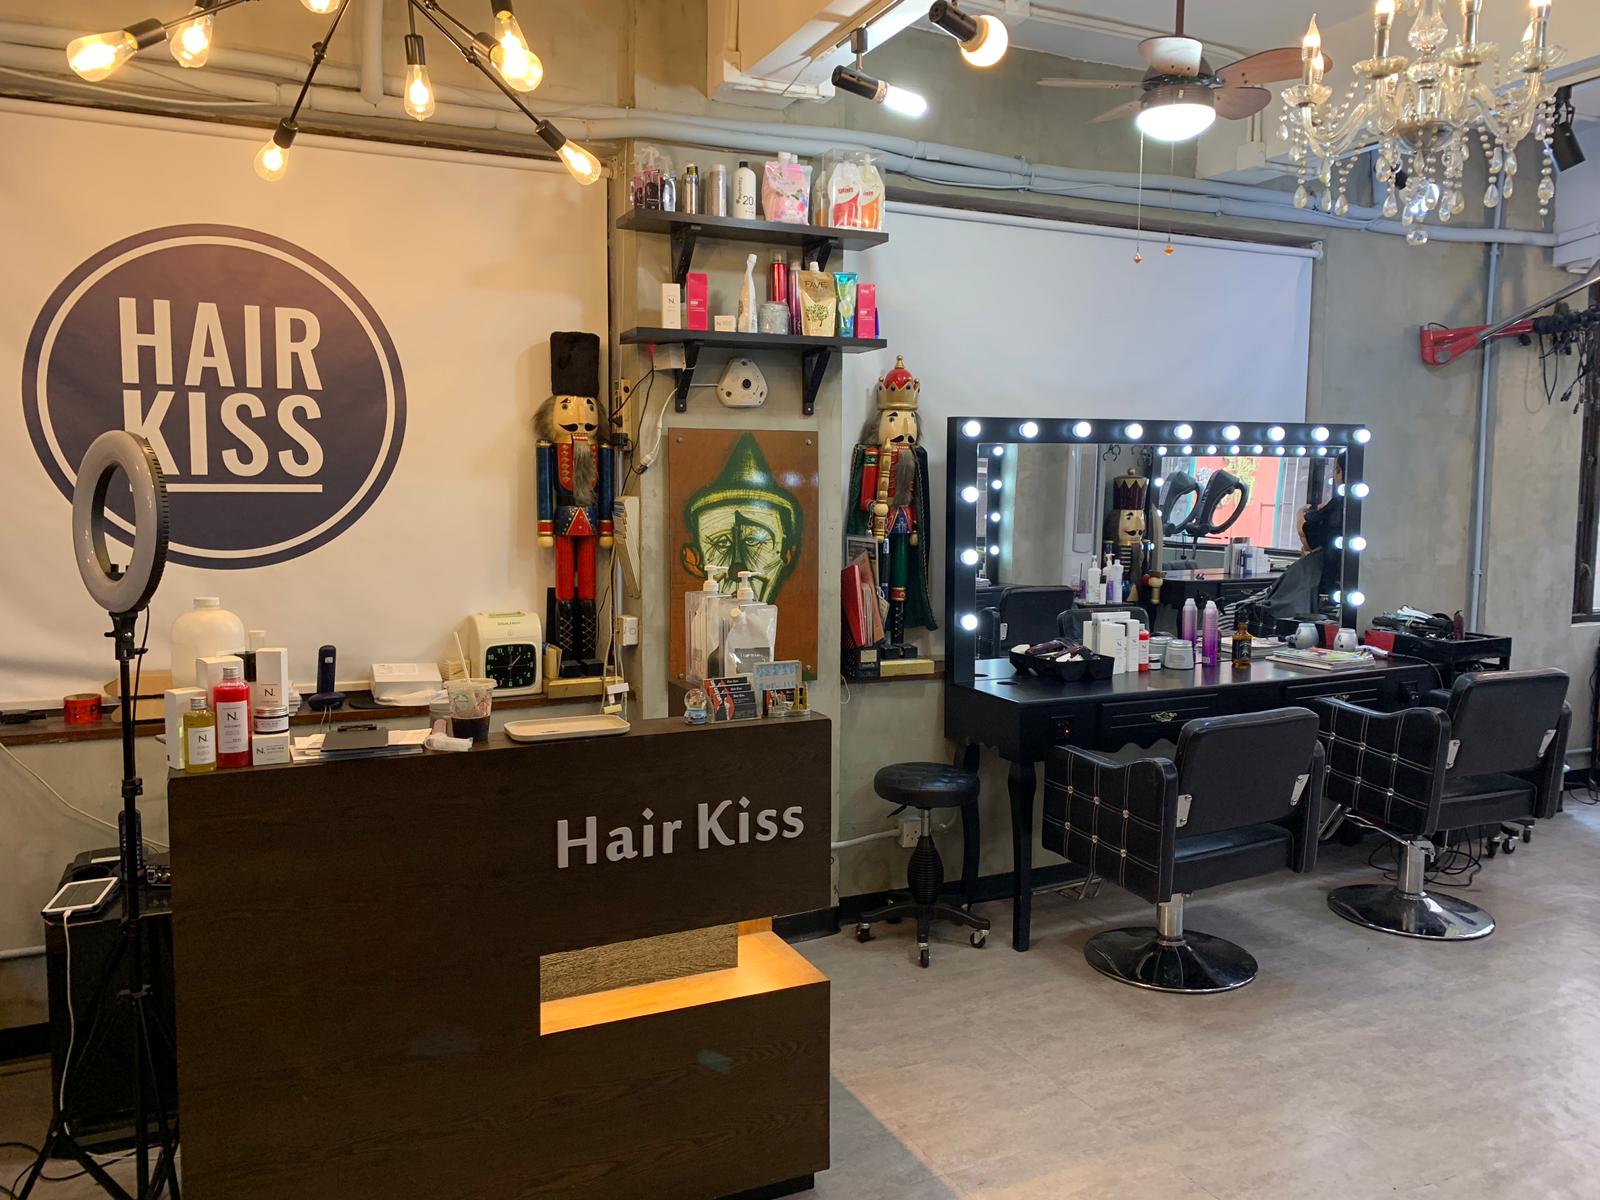 HK Hair Salon Hair Stylist / Salon: Hair Kiss